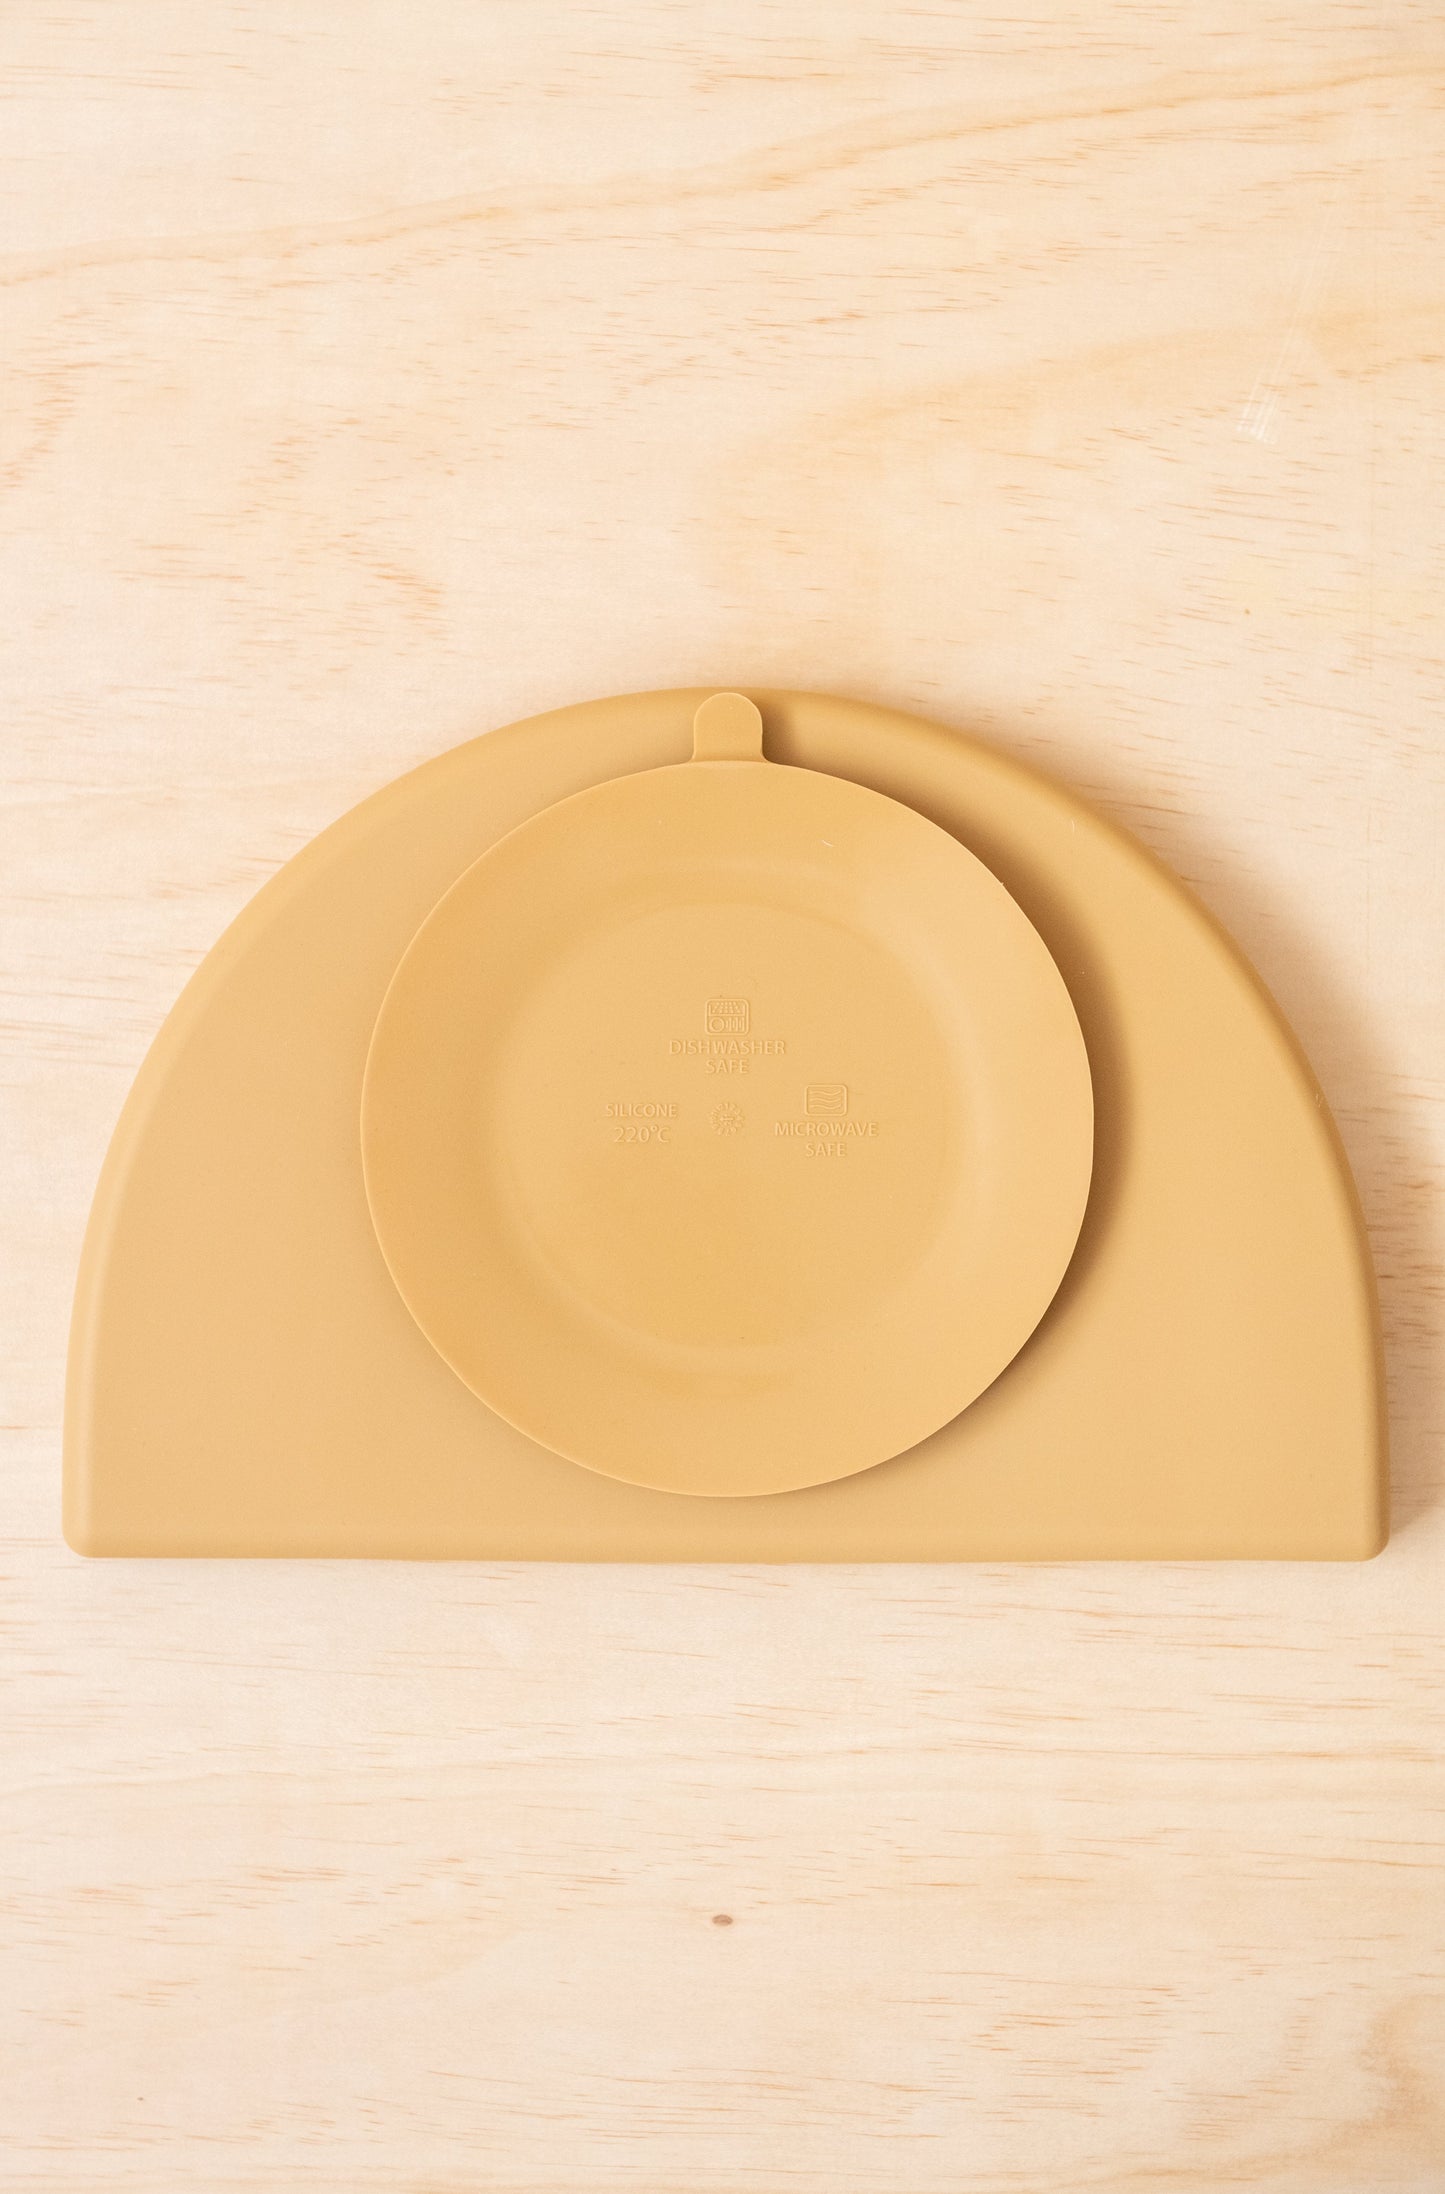 Kiin - Silicone Divided Plate (Tan)